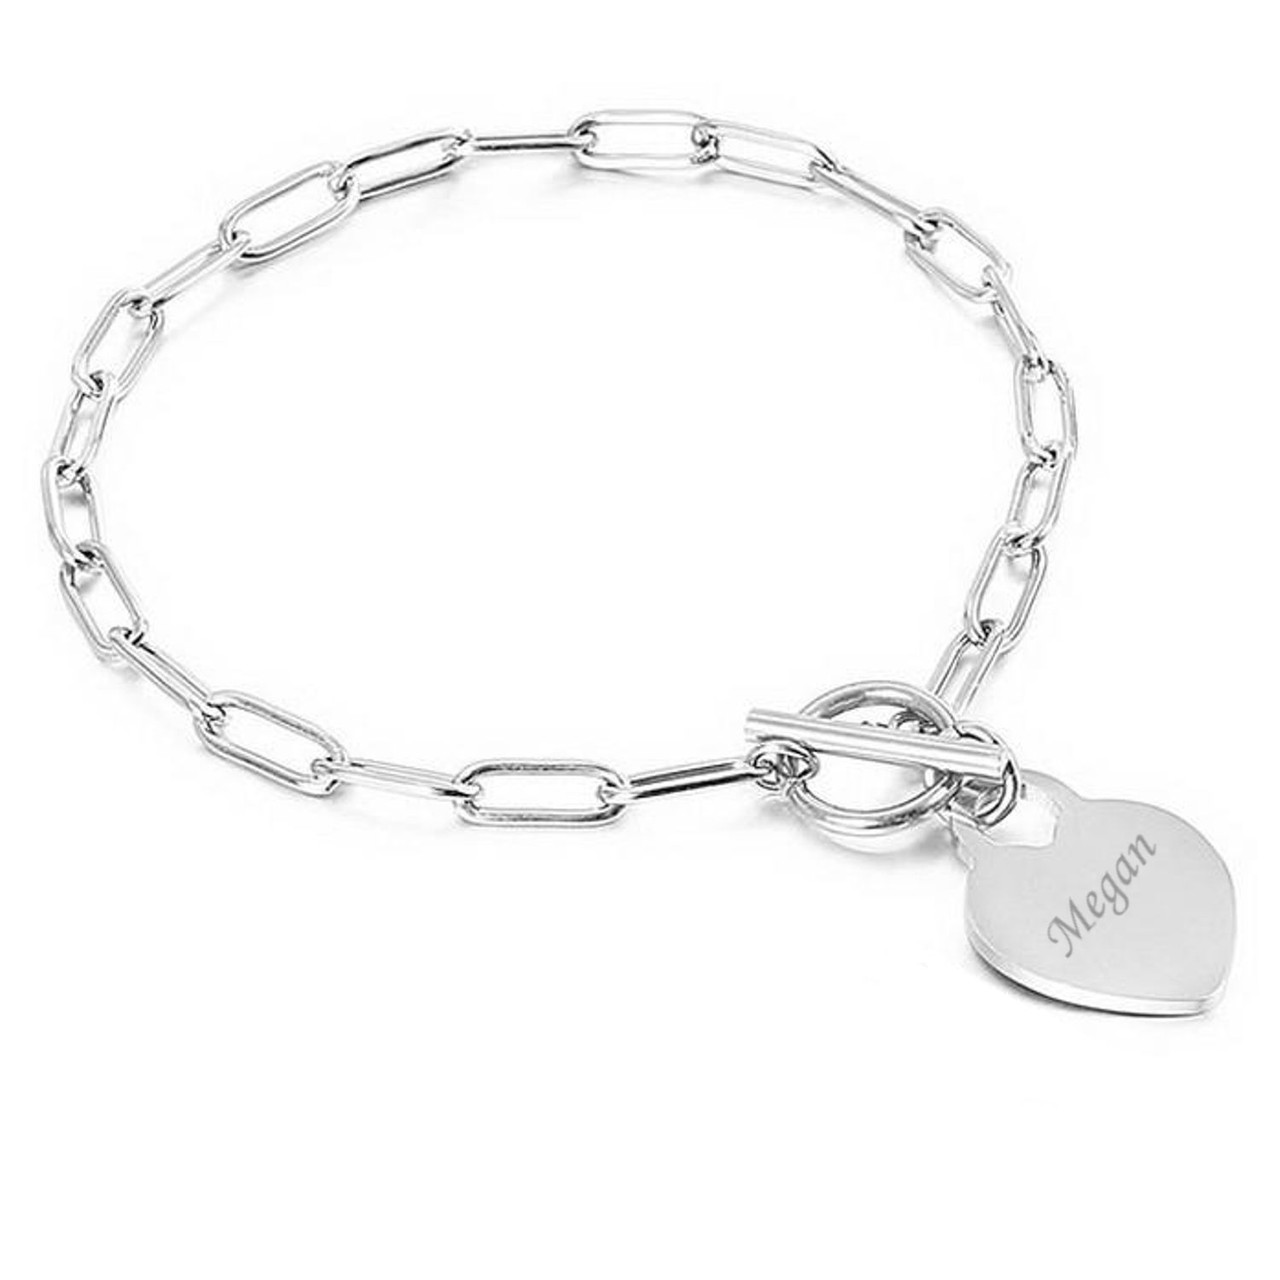 Sterling Silver Paper Clip Heart Charm Bracelet